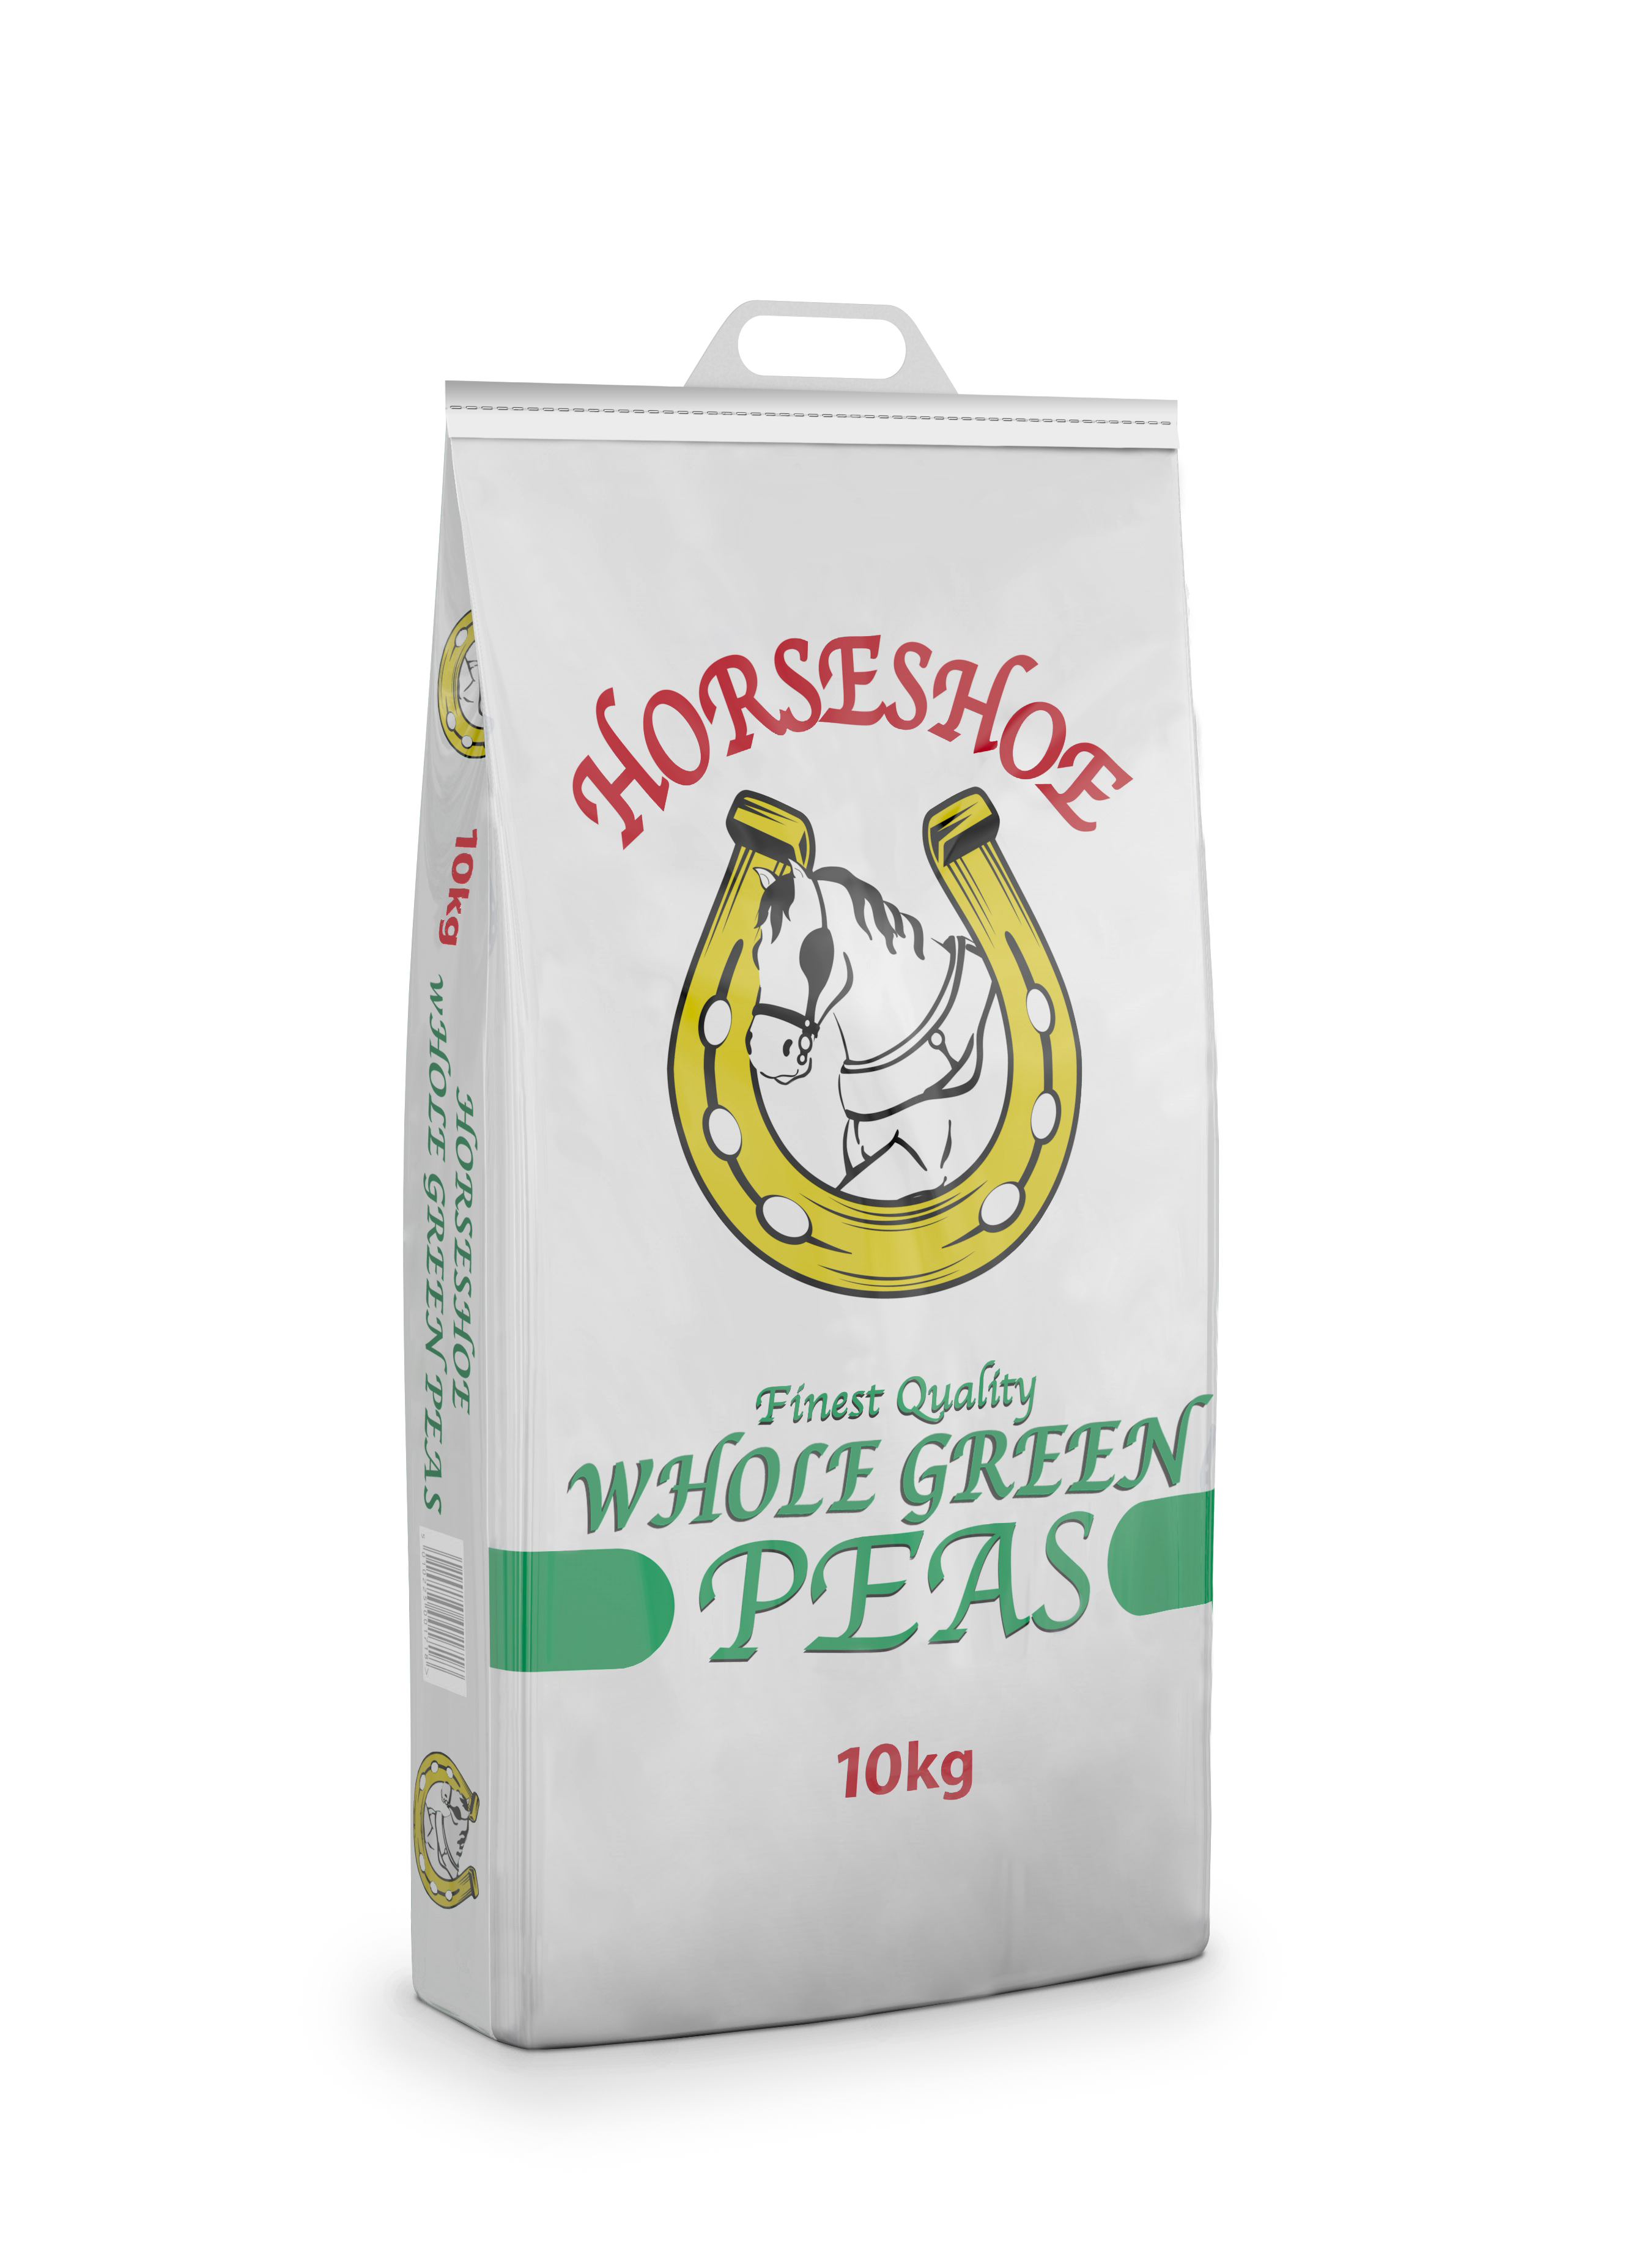 Ficticio Horseshoe Whole Green Peas 10kg 0722.jpg